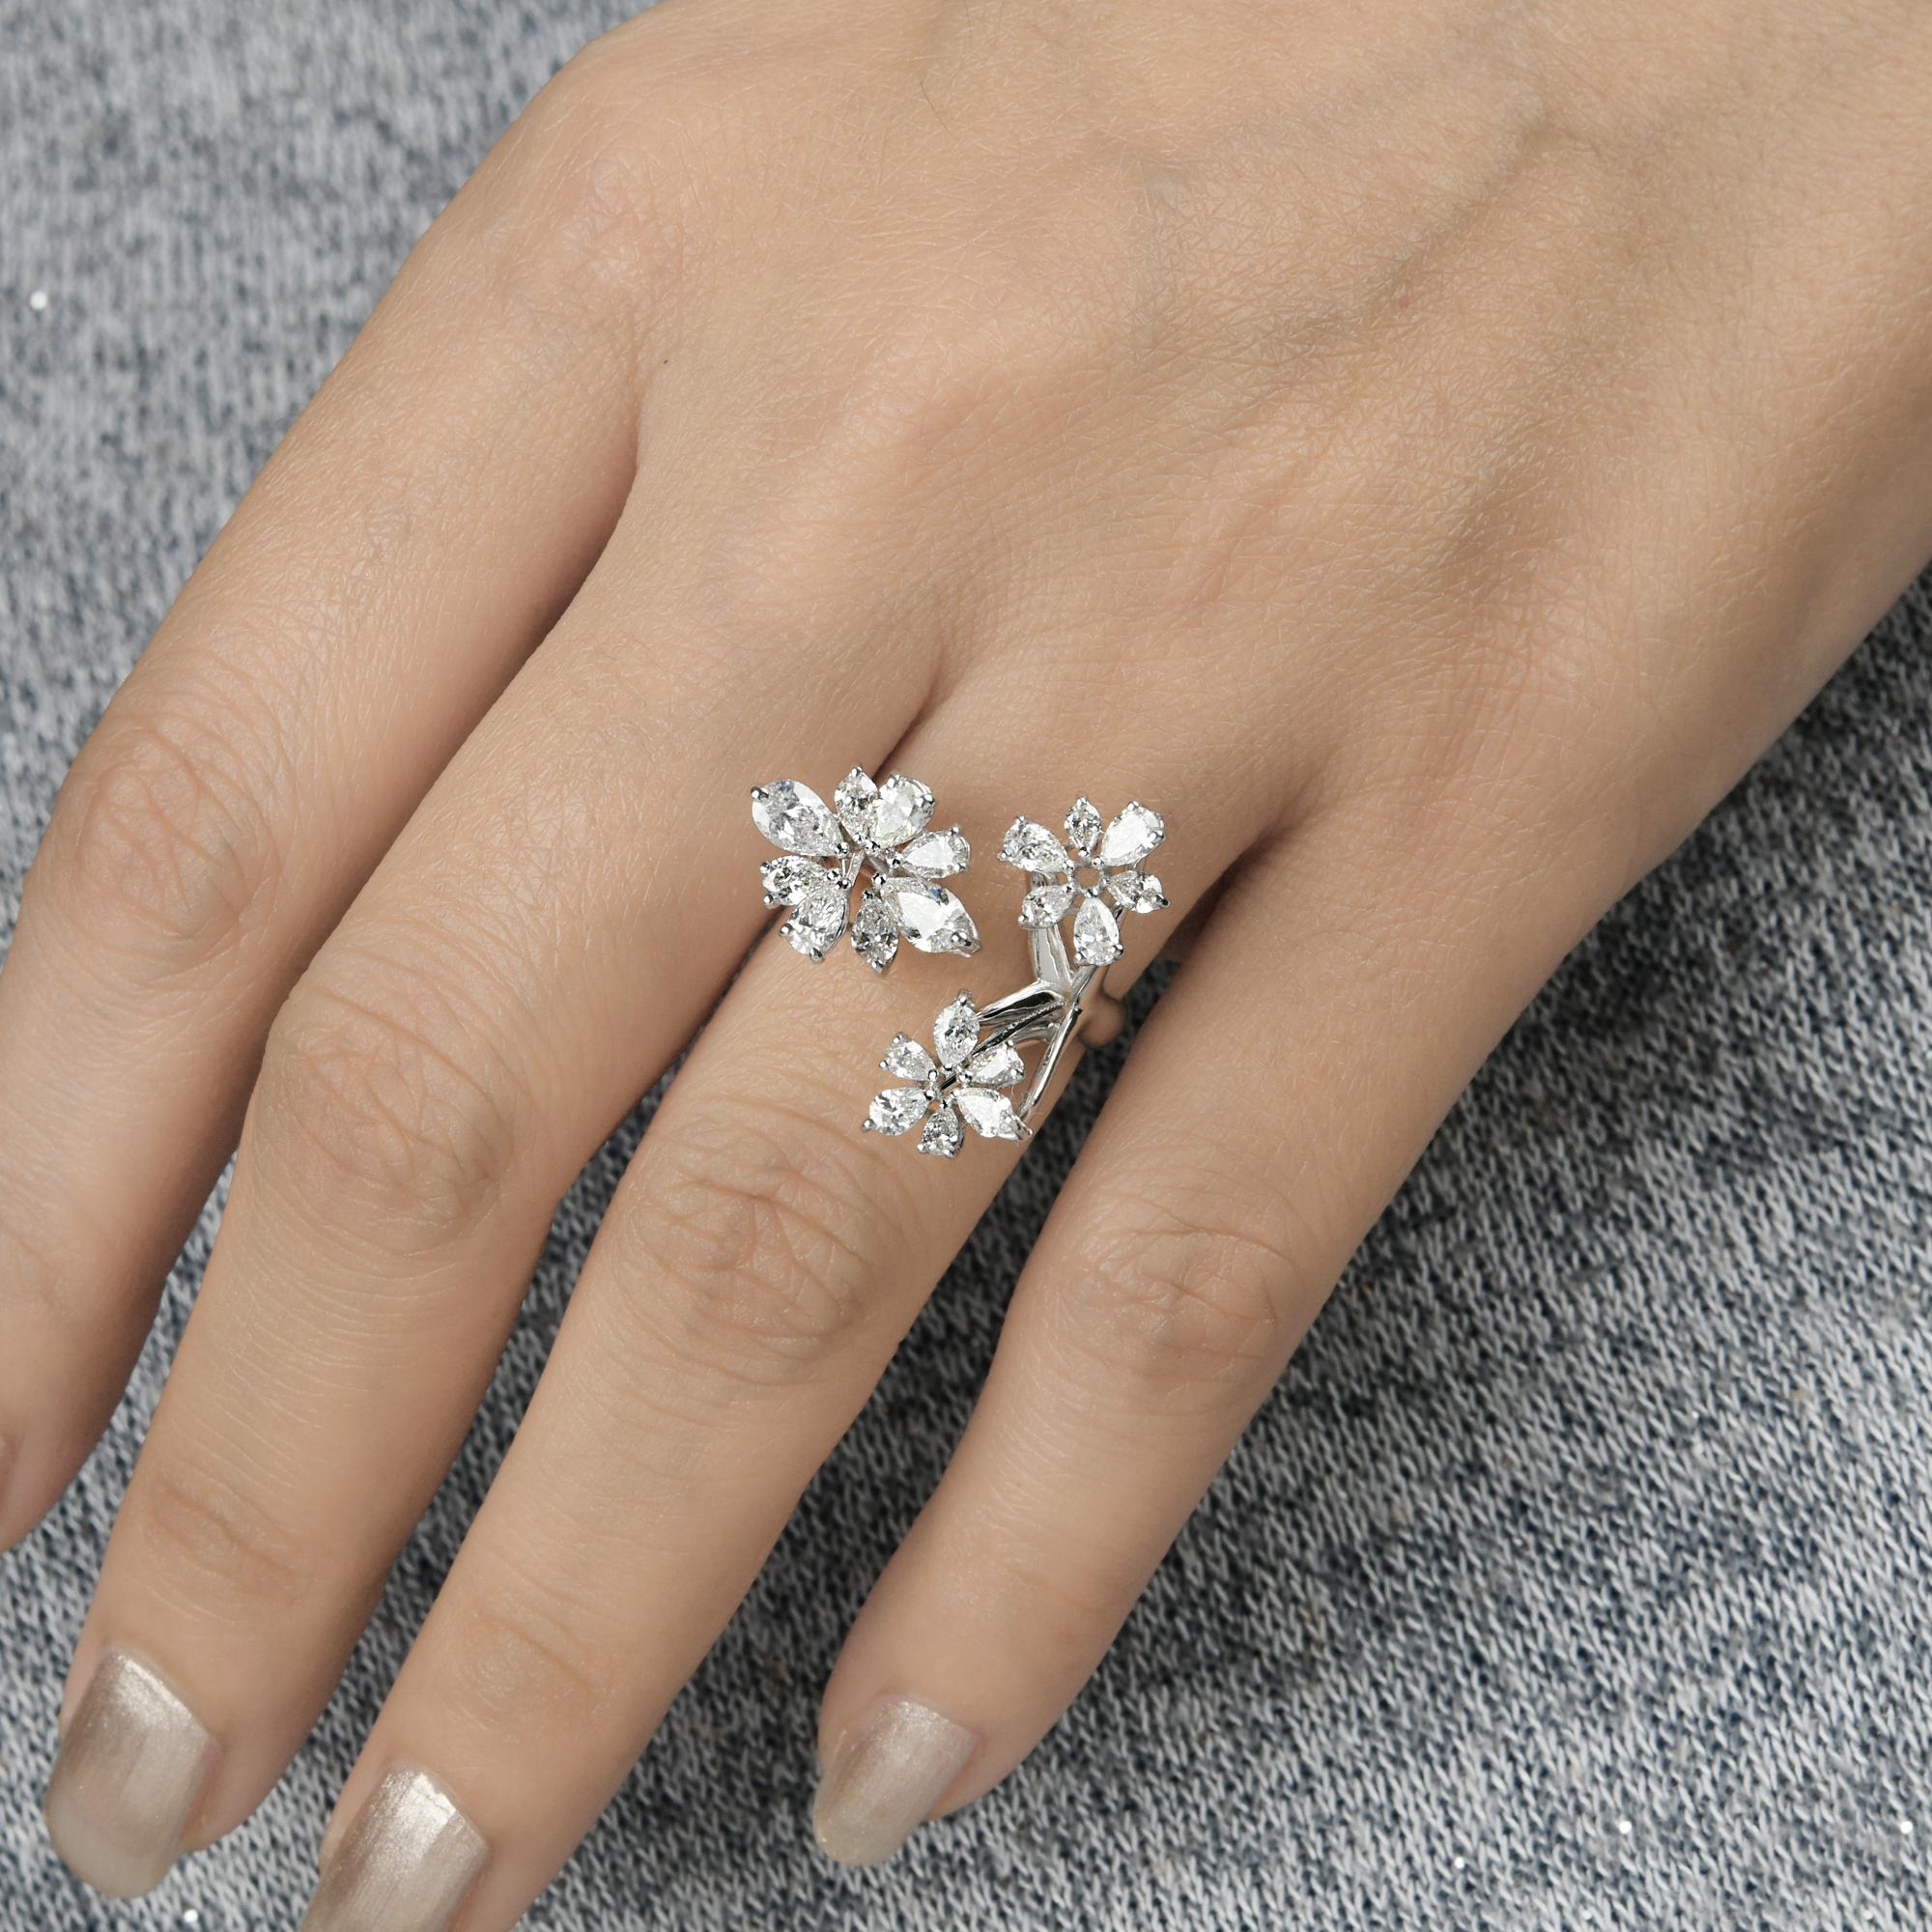 Women's Natural 1.83 Carat Pear Diamond Flower Ring 14 Karat White Gold Fine Jewelry For Sale